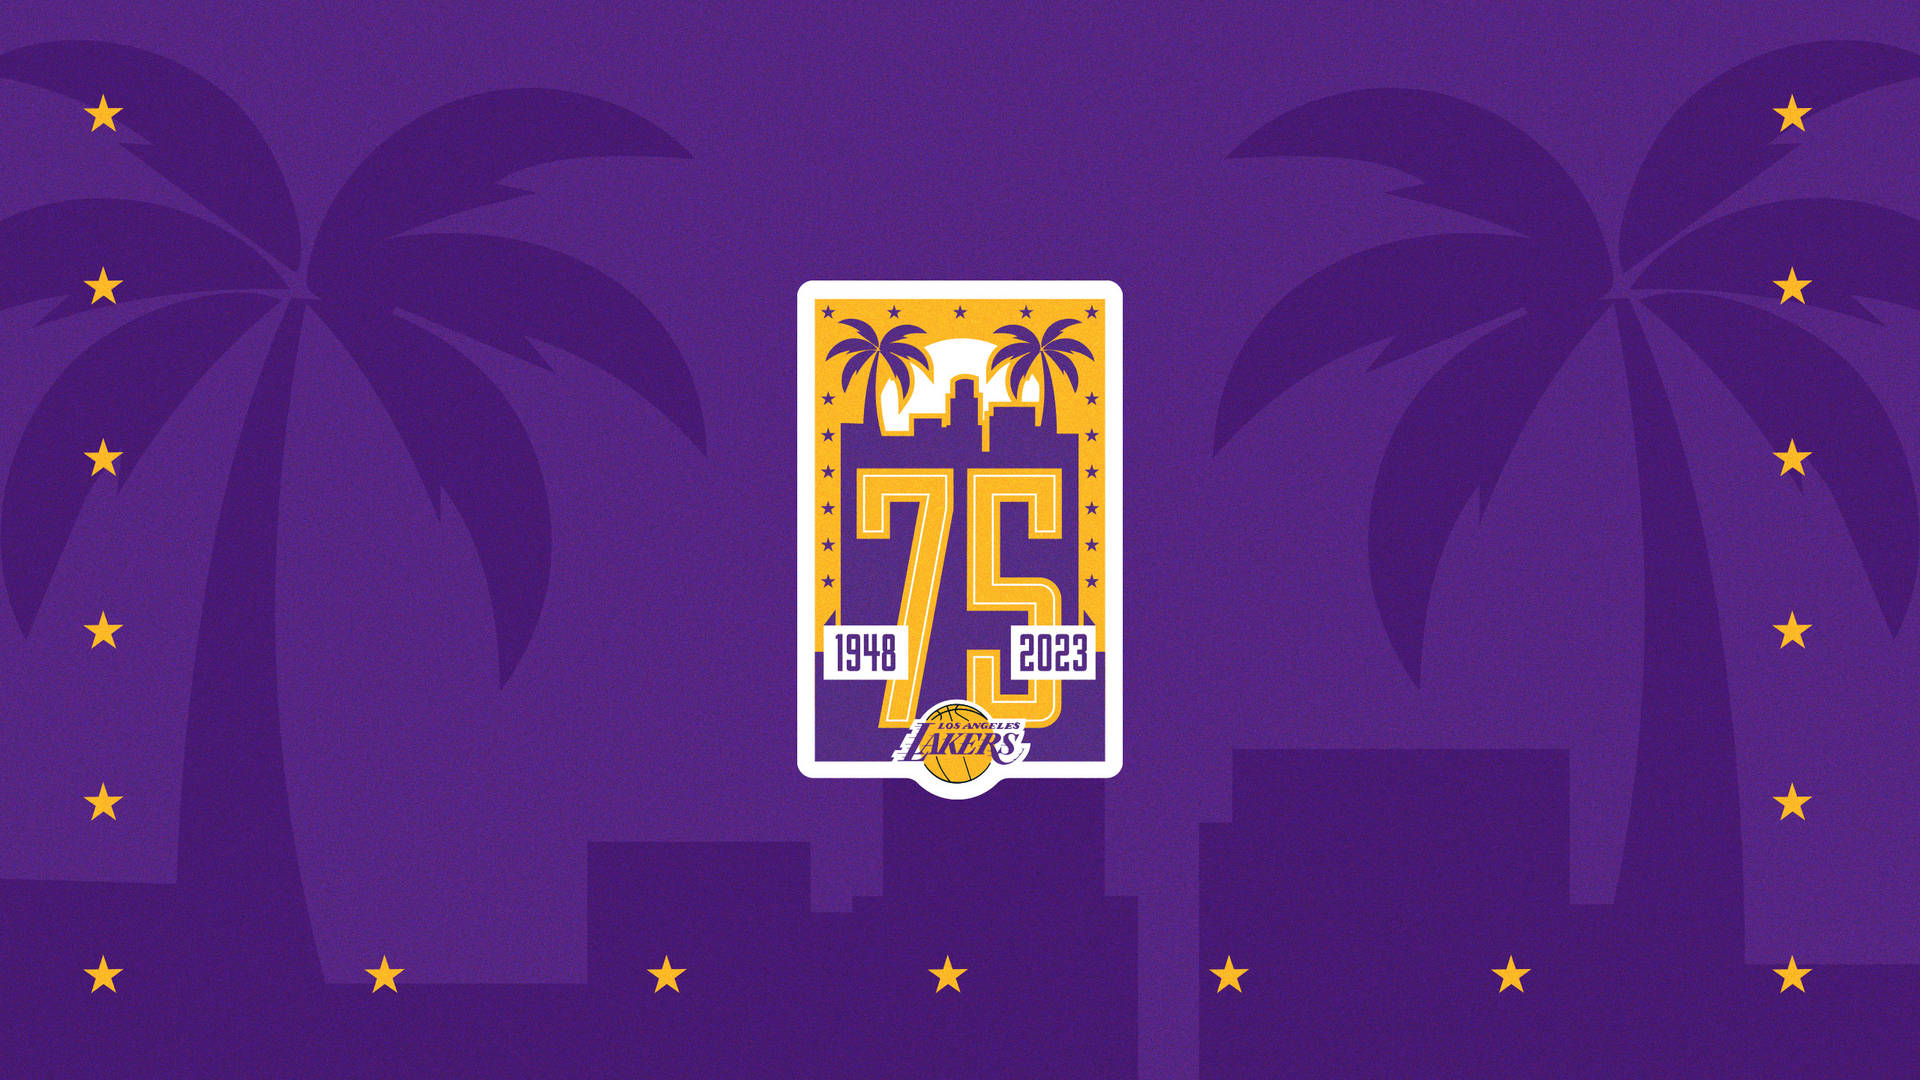 Los Angeles Lakers 75 Years Wallpaper